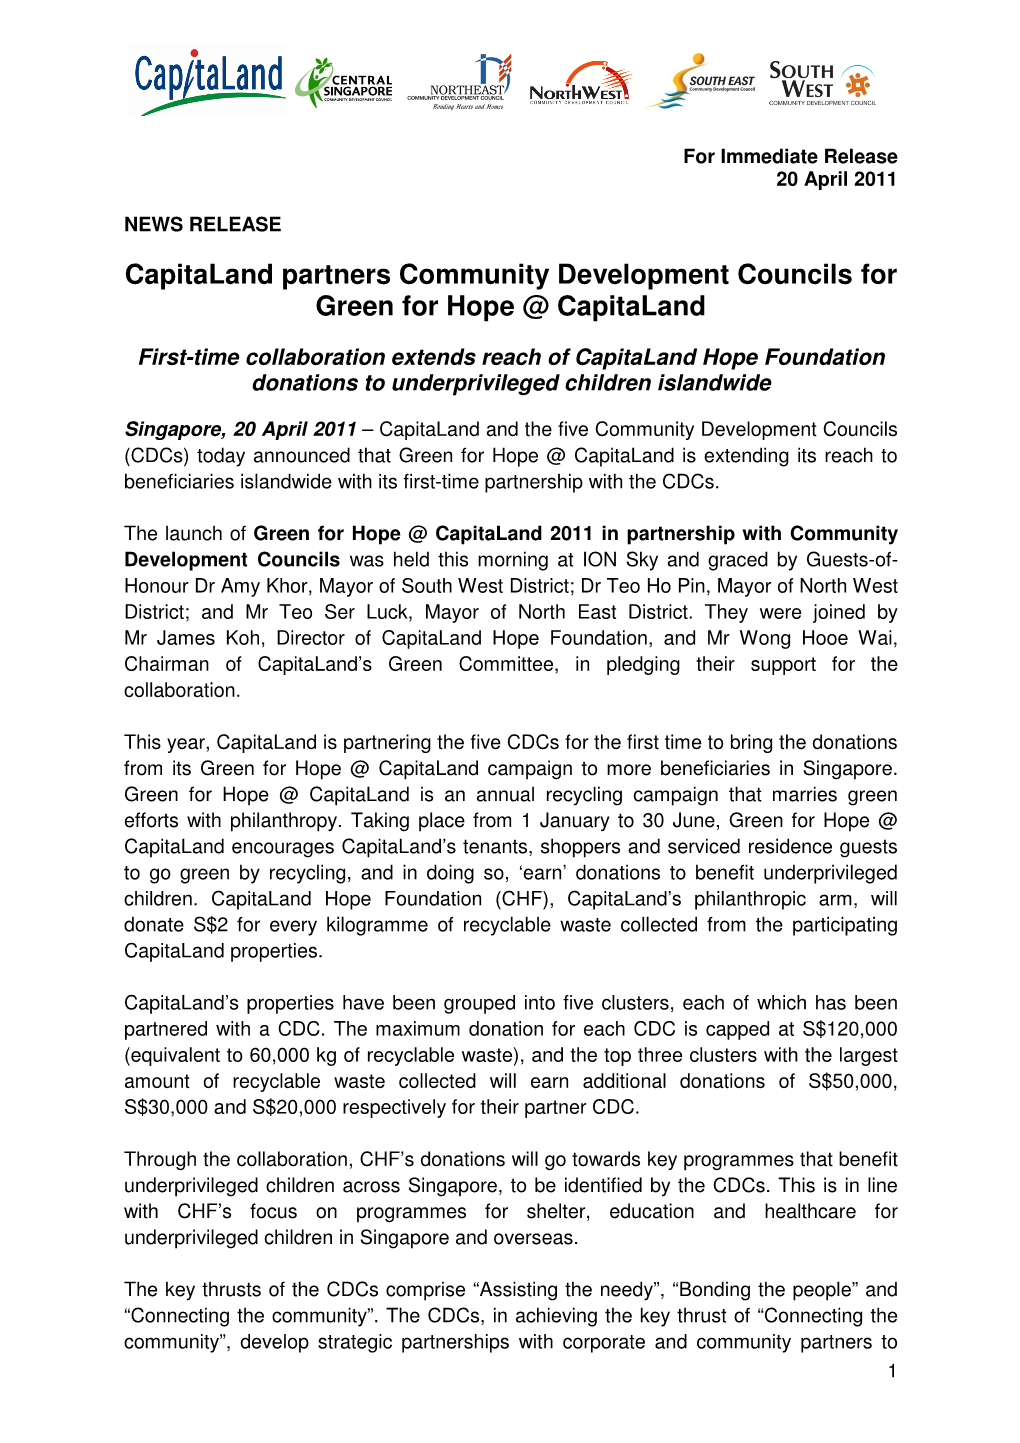 Capitaland Partners Community Development Councils for Green for Hope @ Capitaland